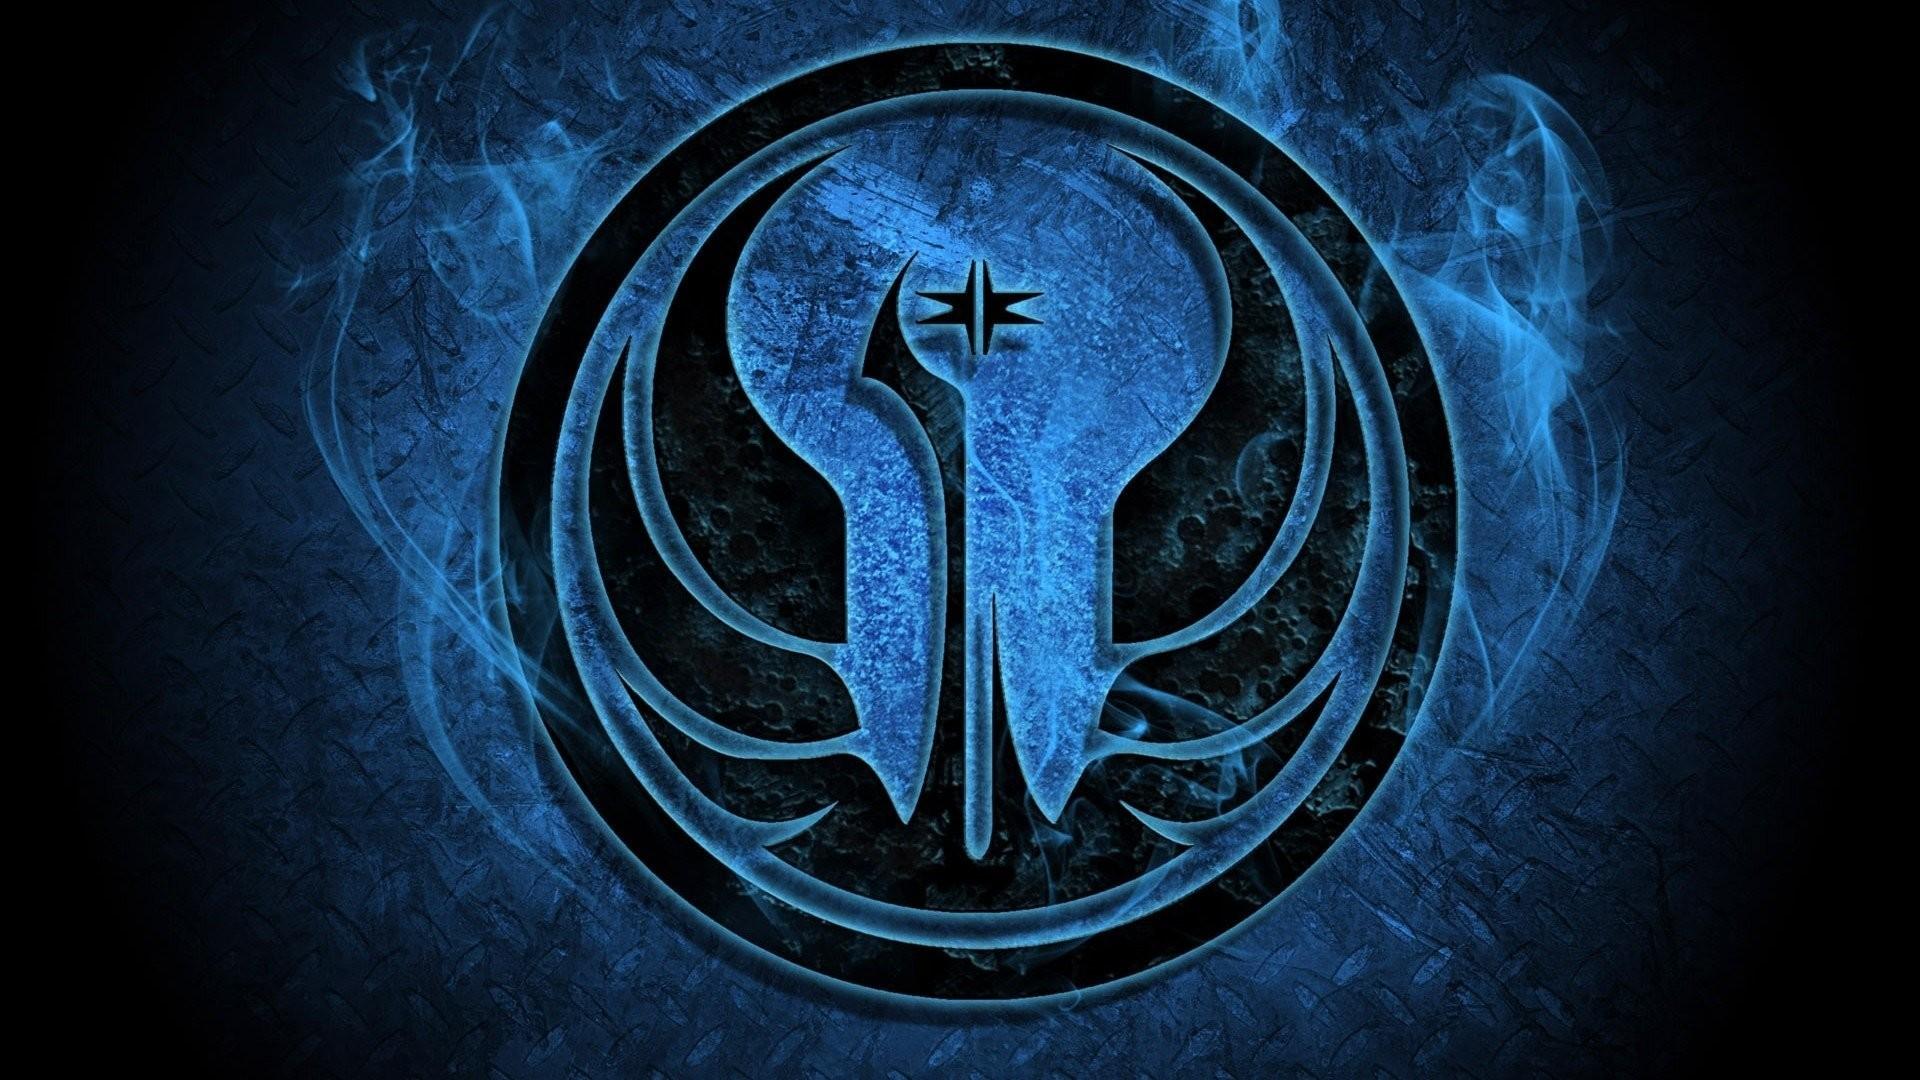 Star Wars Logo Wallpaper background picture